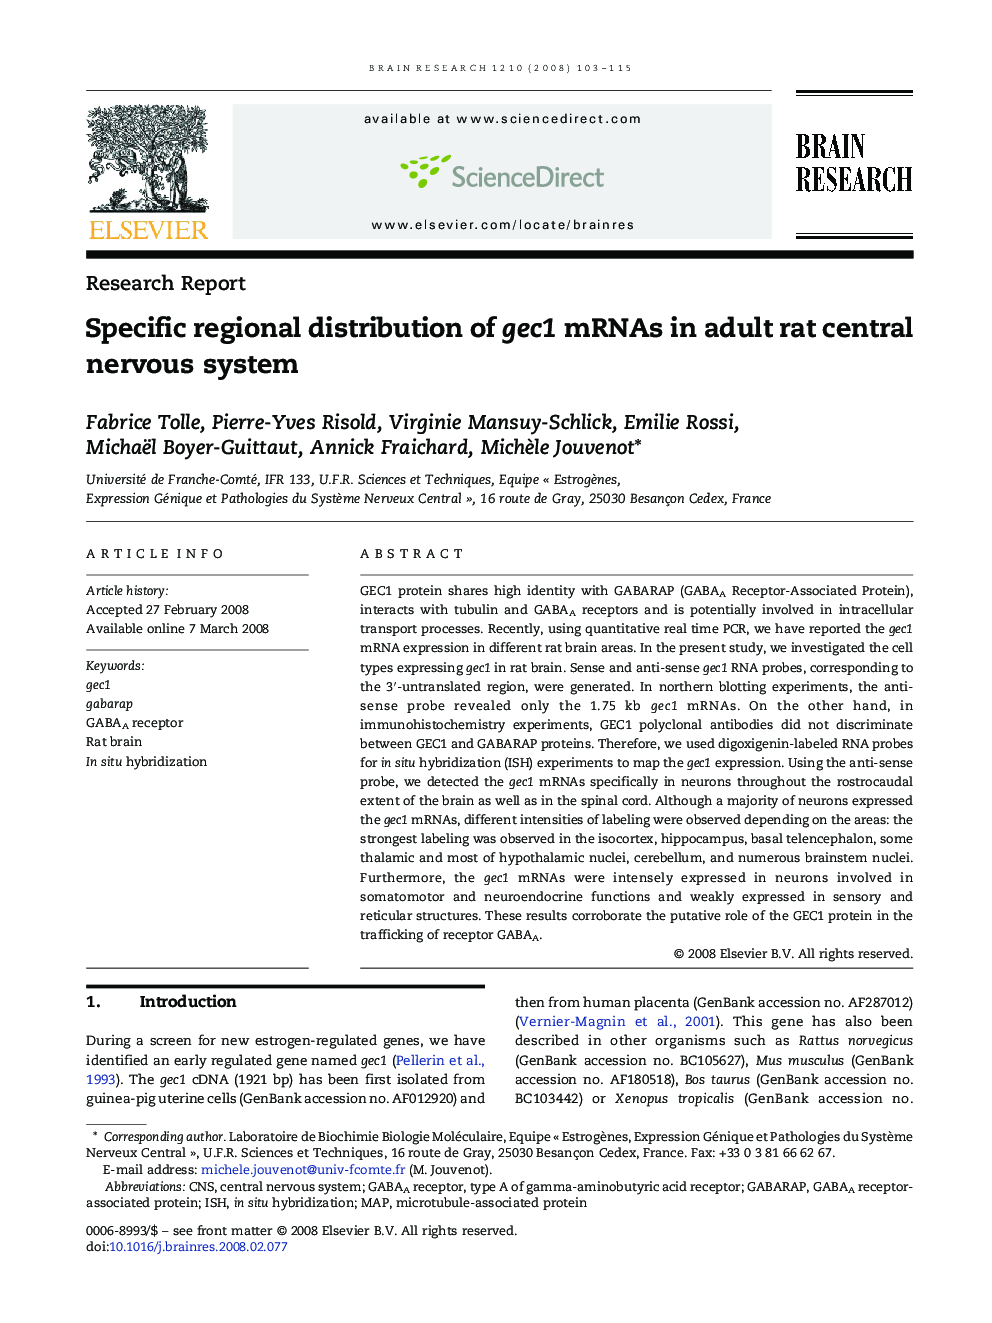 Specific regional distribution of gec1 mRNAs in adult rat central nervous system